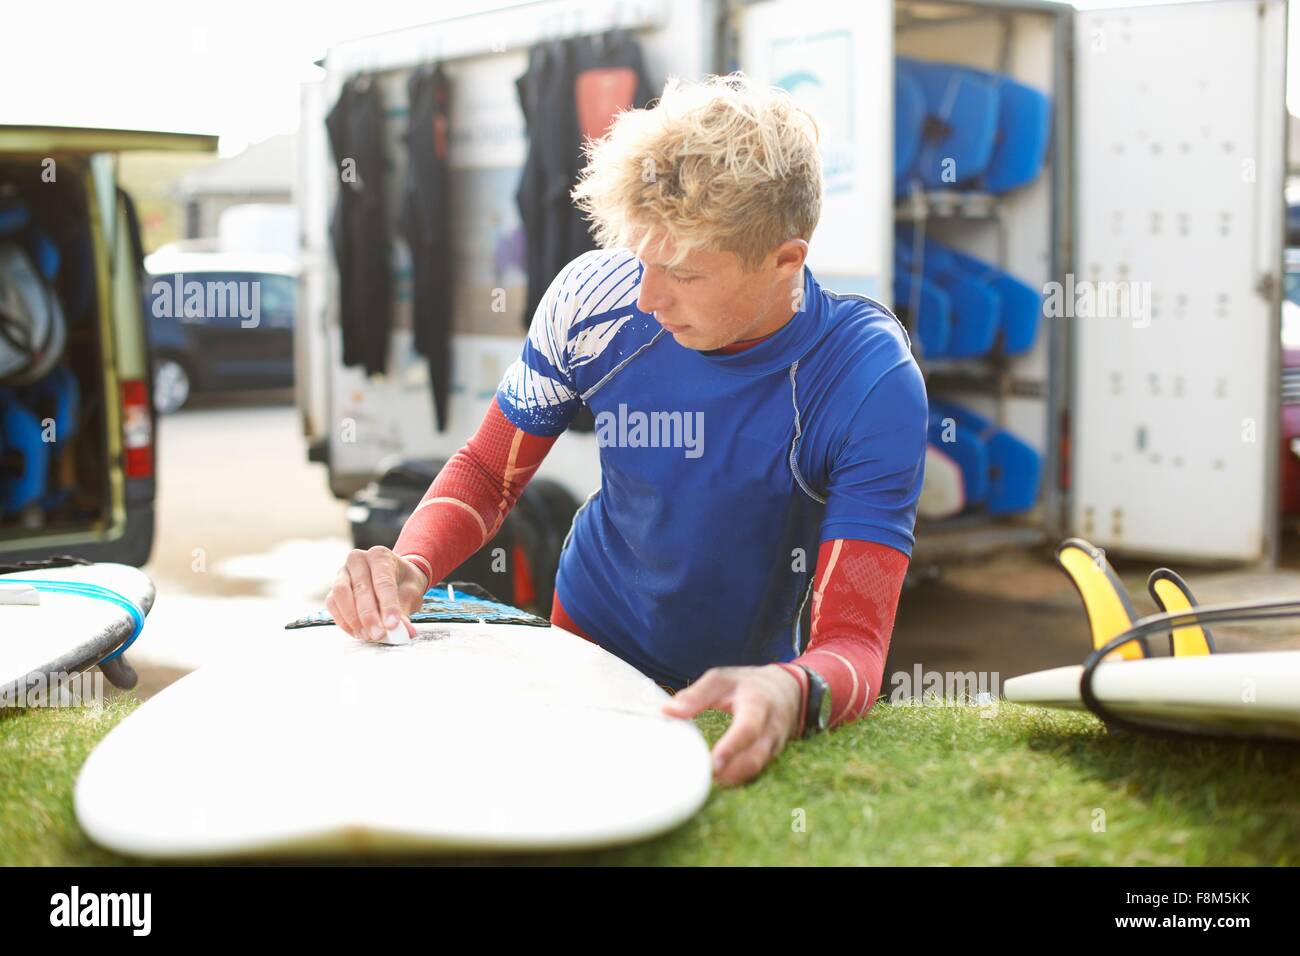 Male surfer waxing surfboard Stock Photo